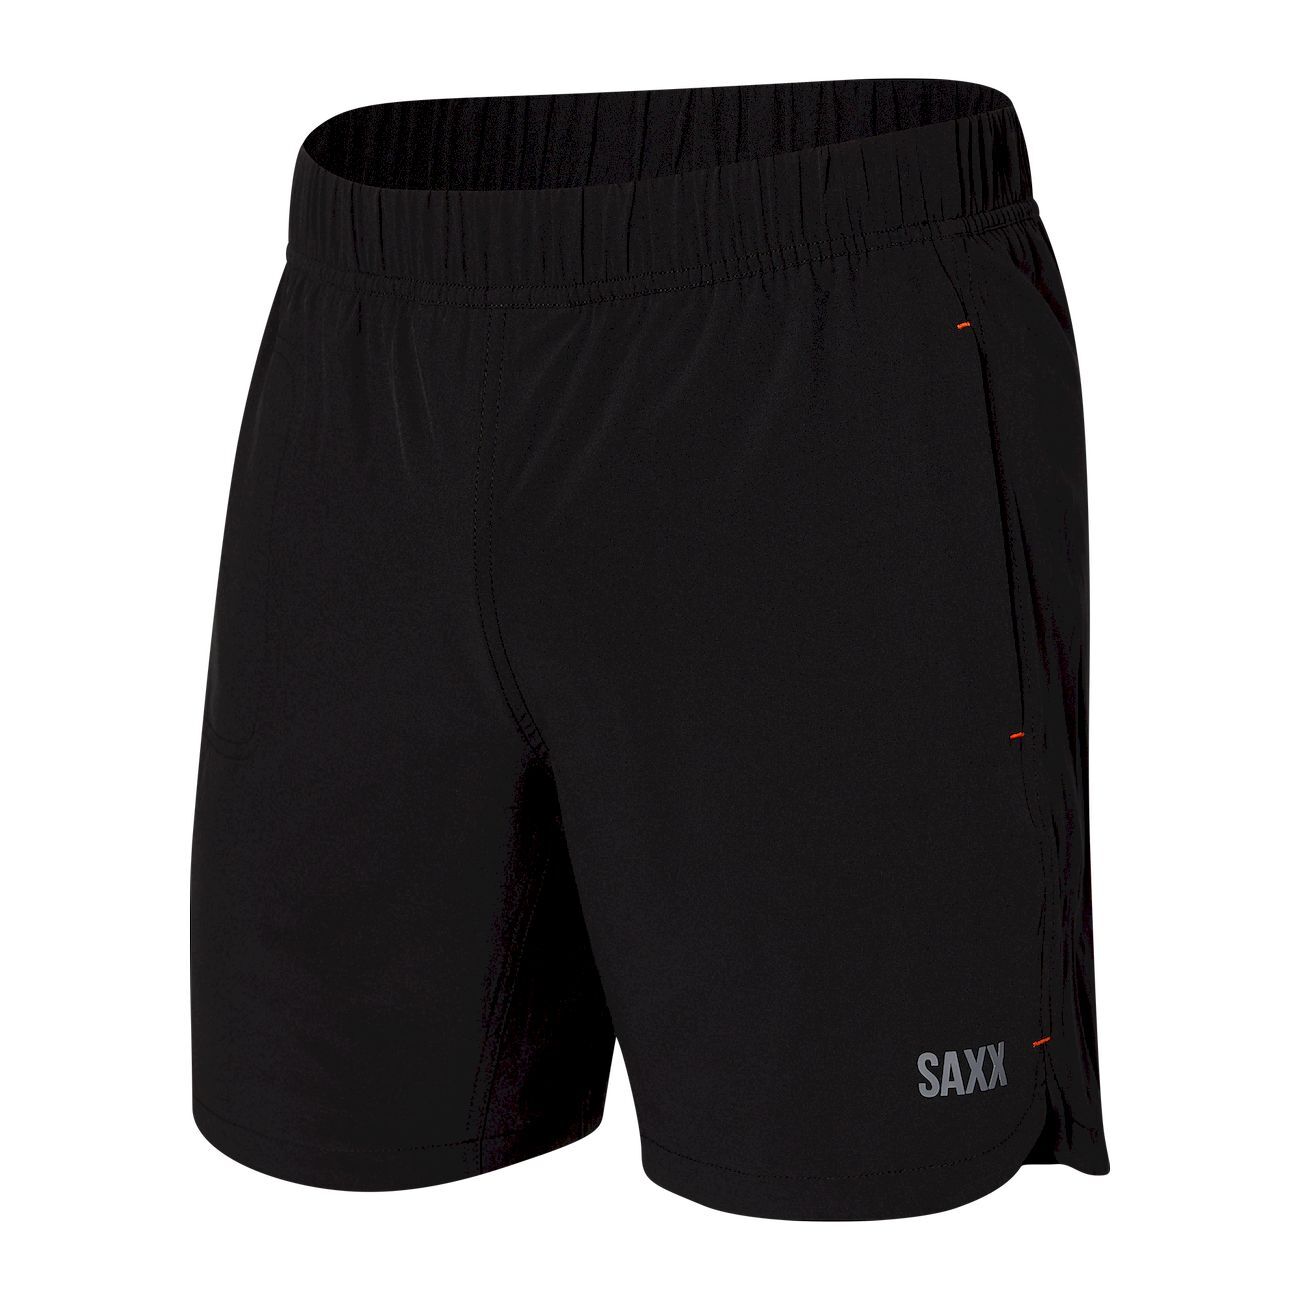 Saxx Gainmaker 2N1 Short 7" - Climbing shorts - Men's